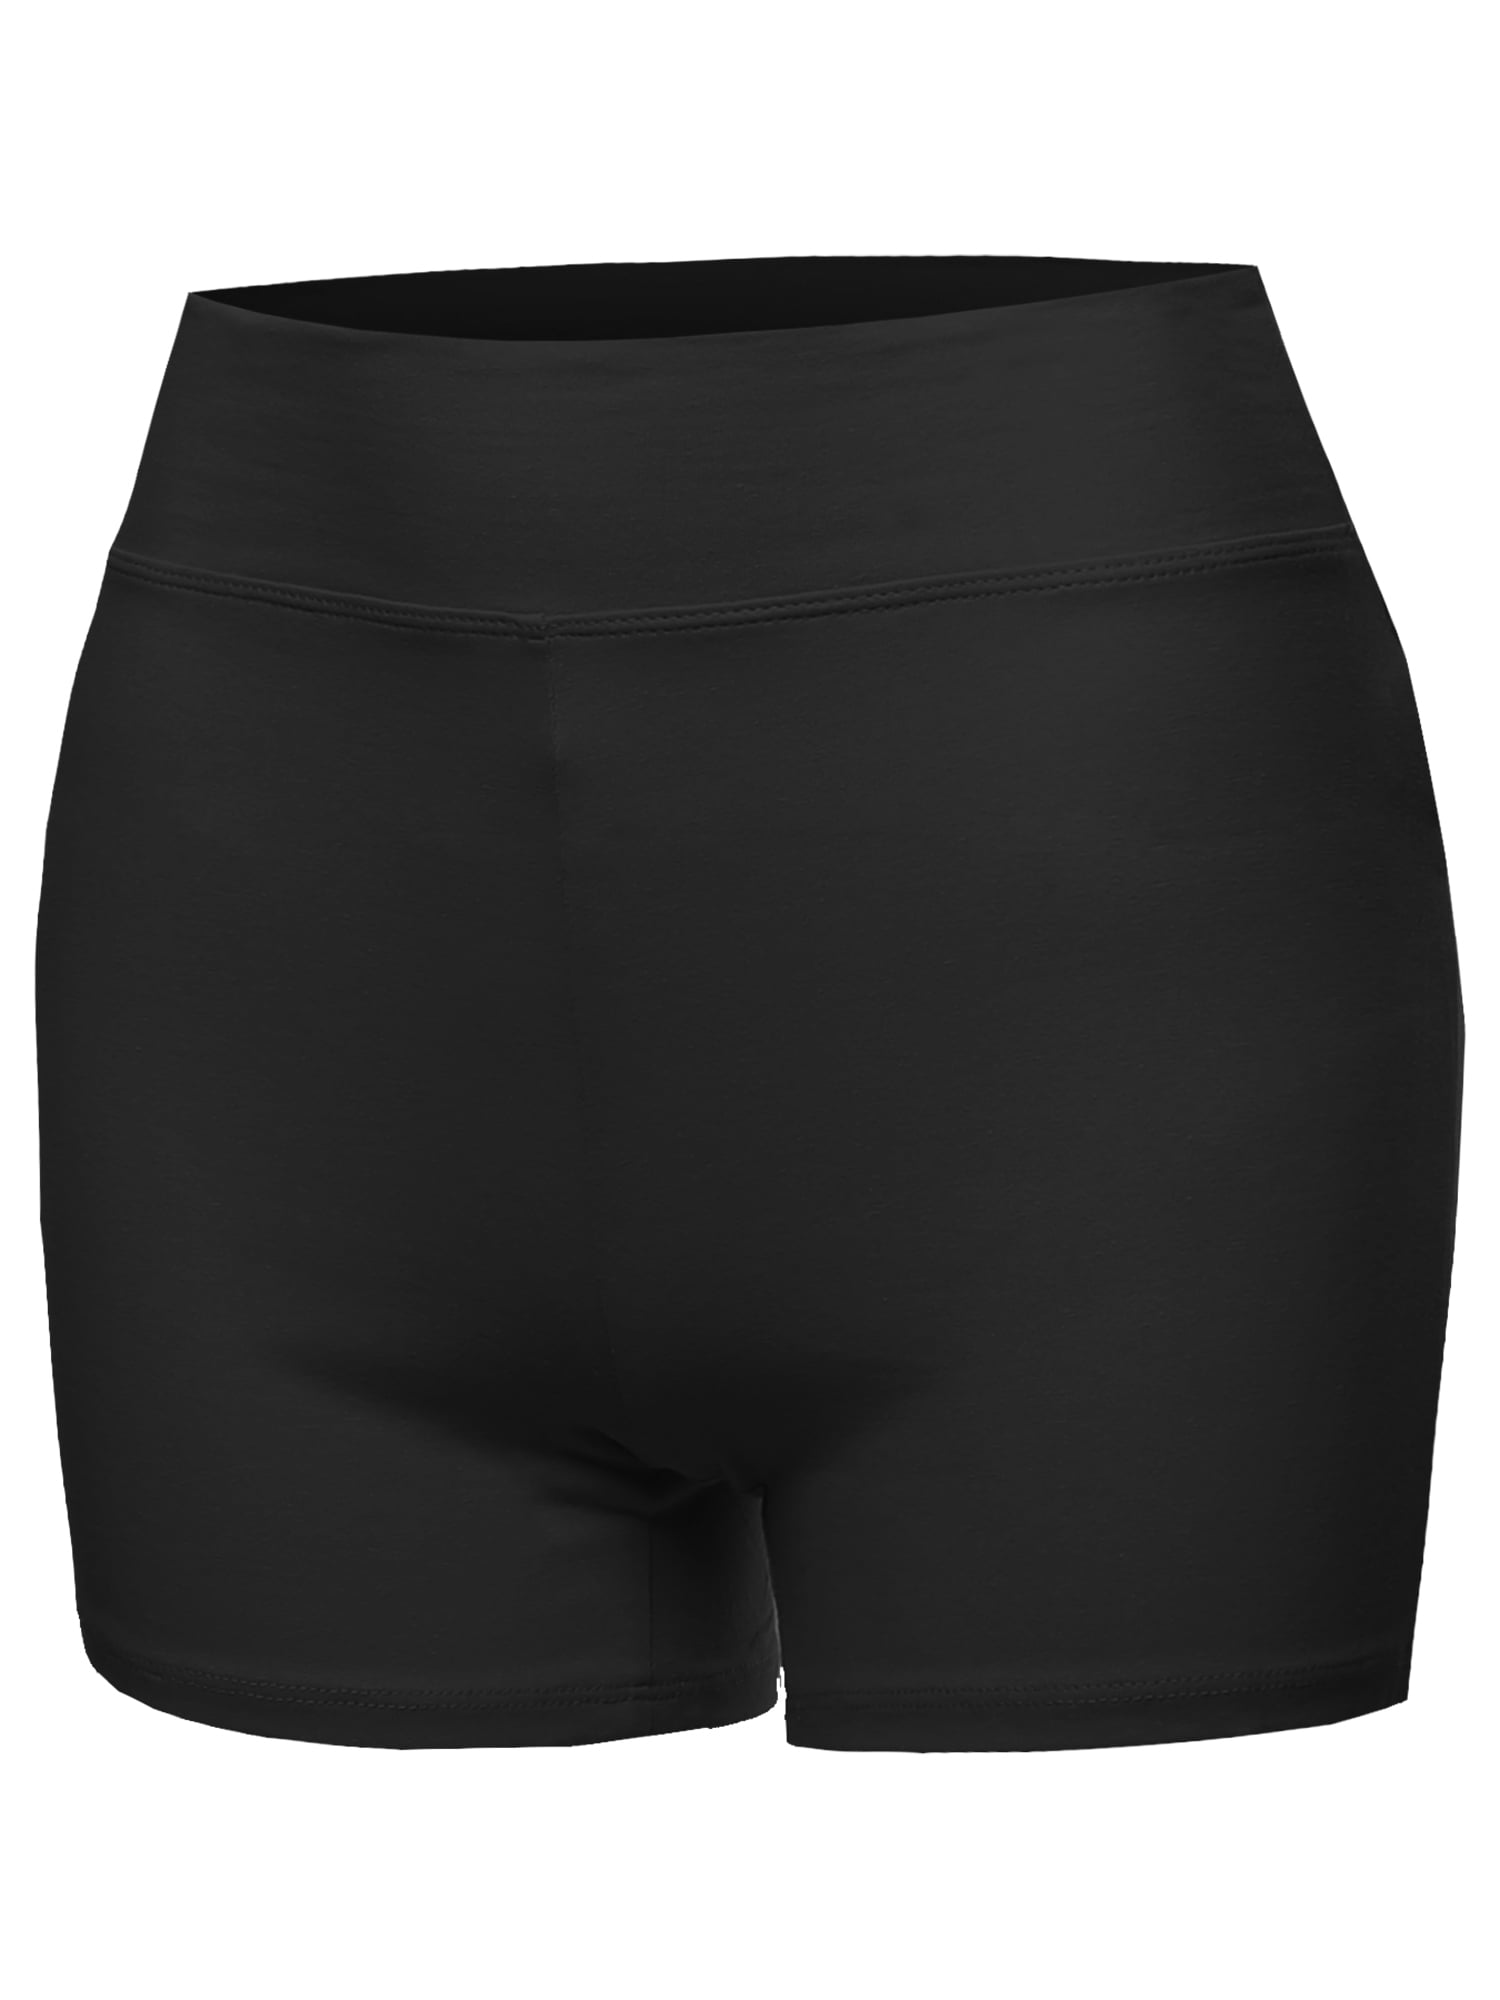 A2Y Women's Basic Solid Premium Cotton High Rise Bike Shorts Black 1XL ...